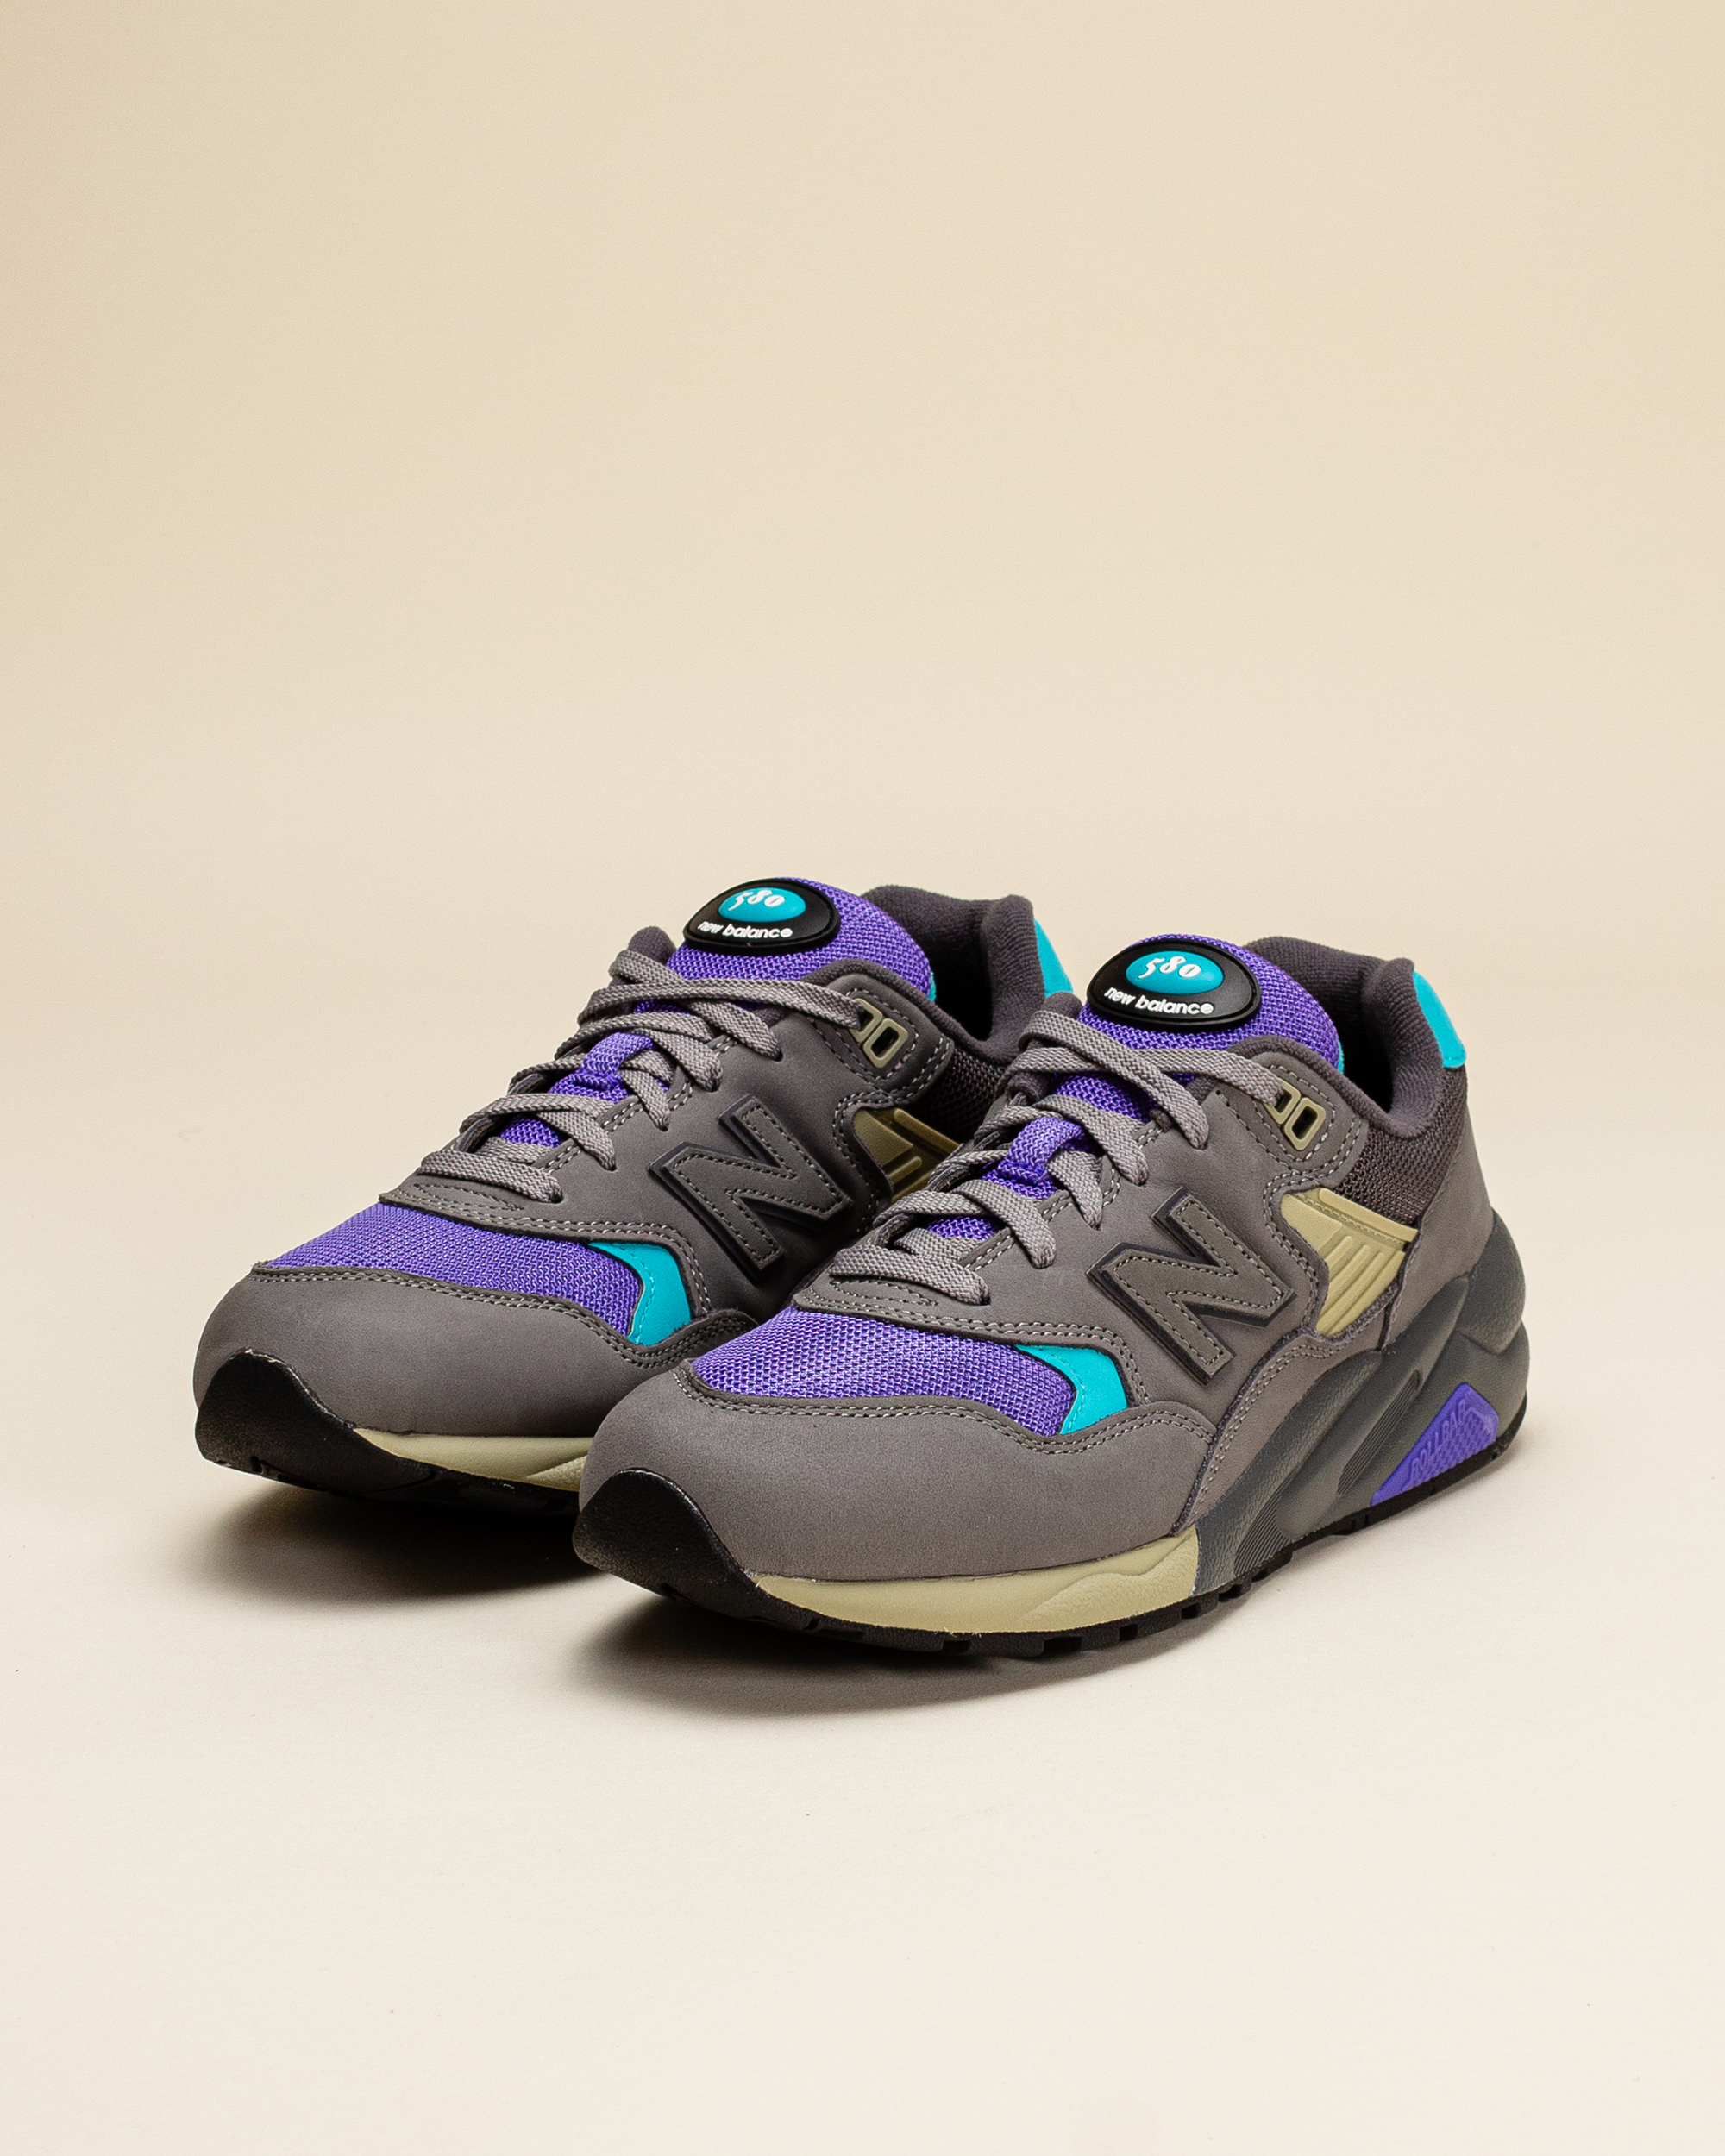 New Balance MT580 Grey/Purple/Aqua